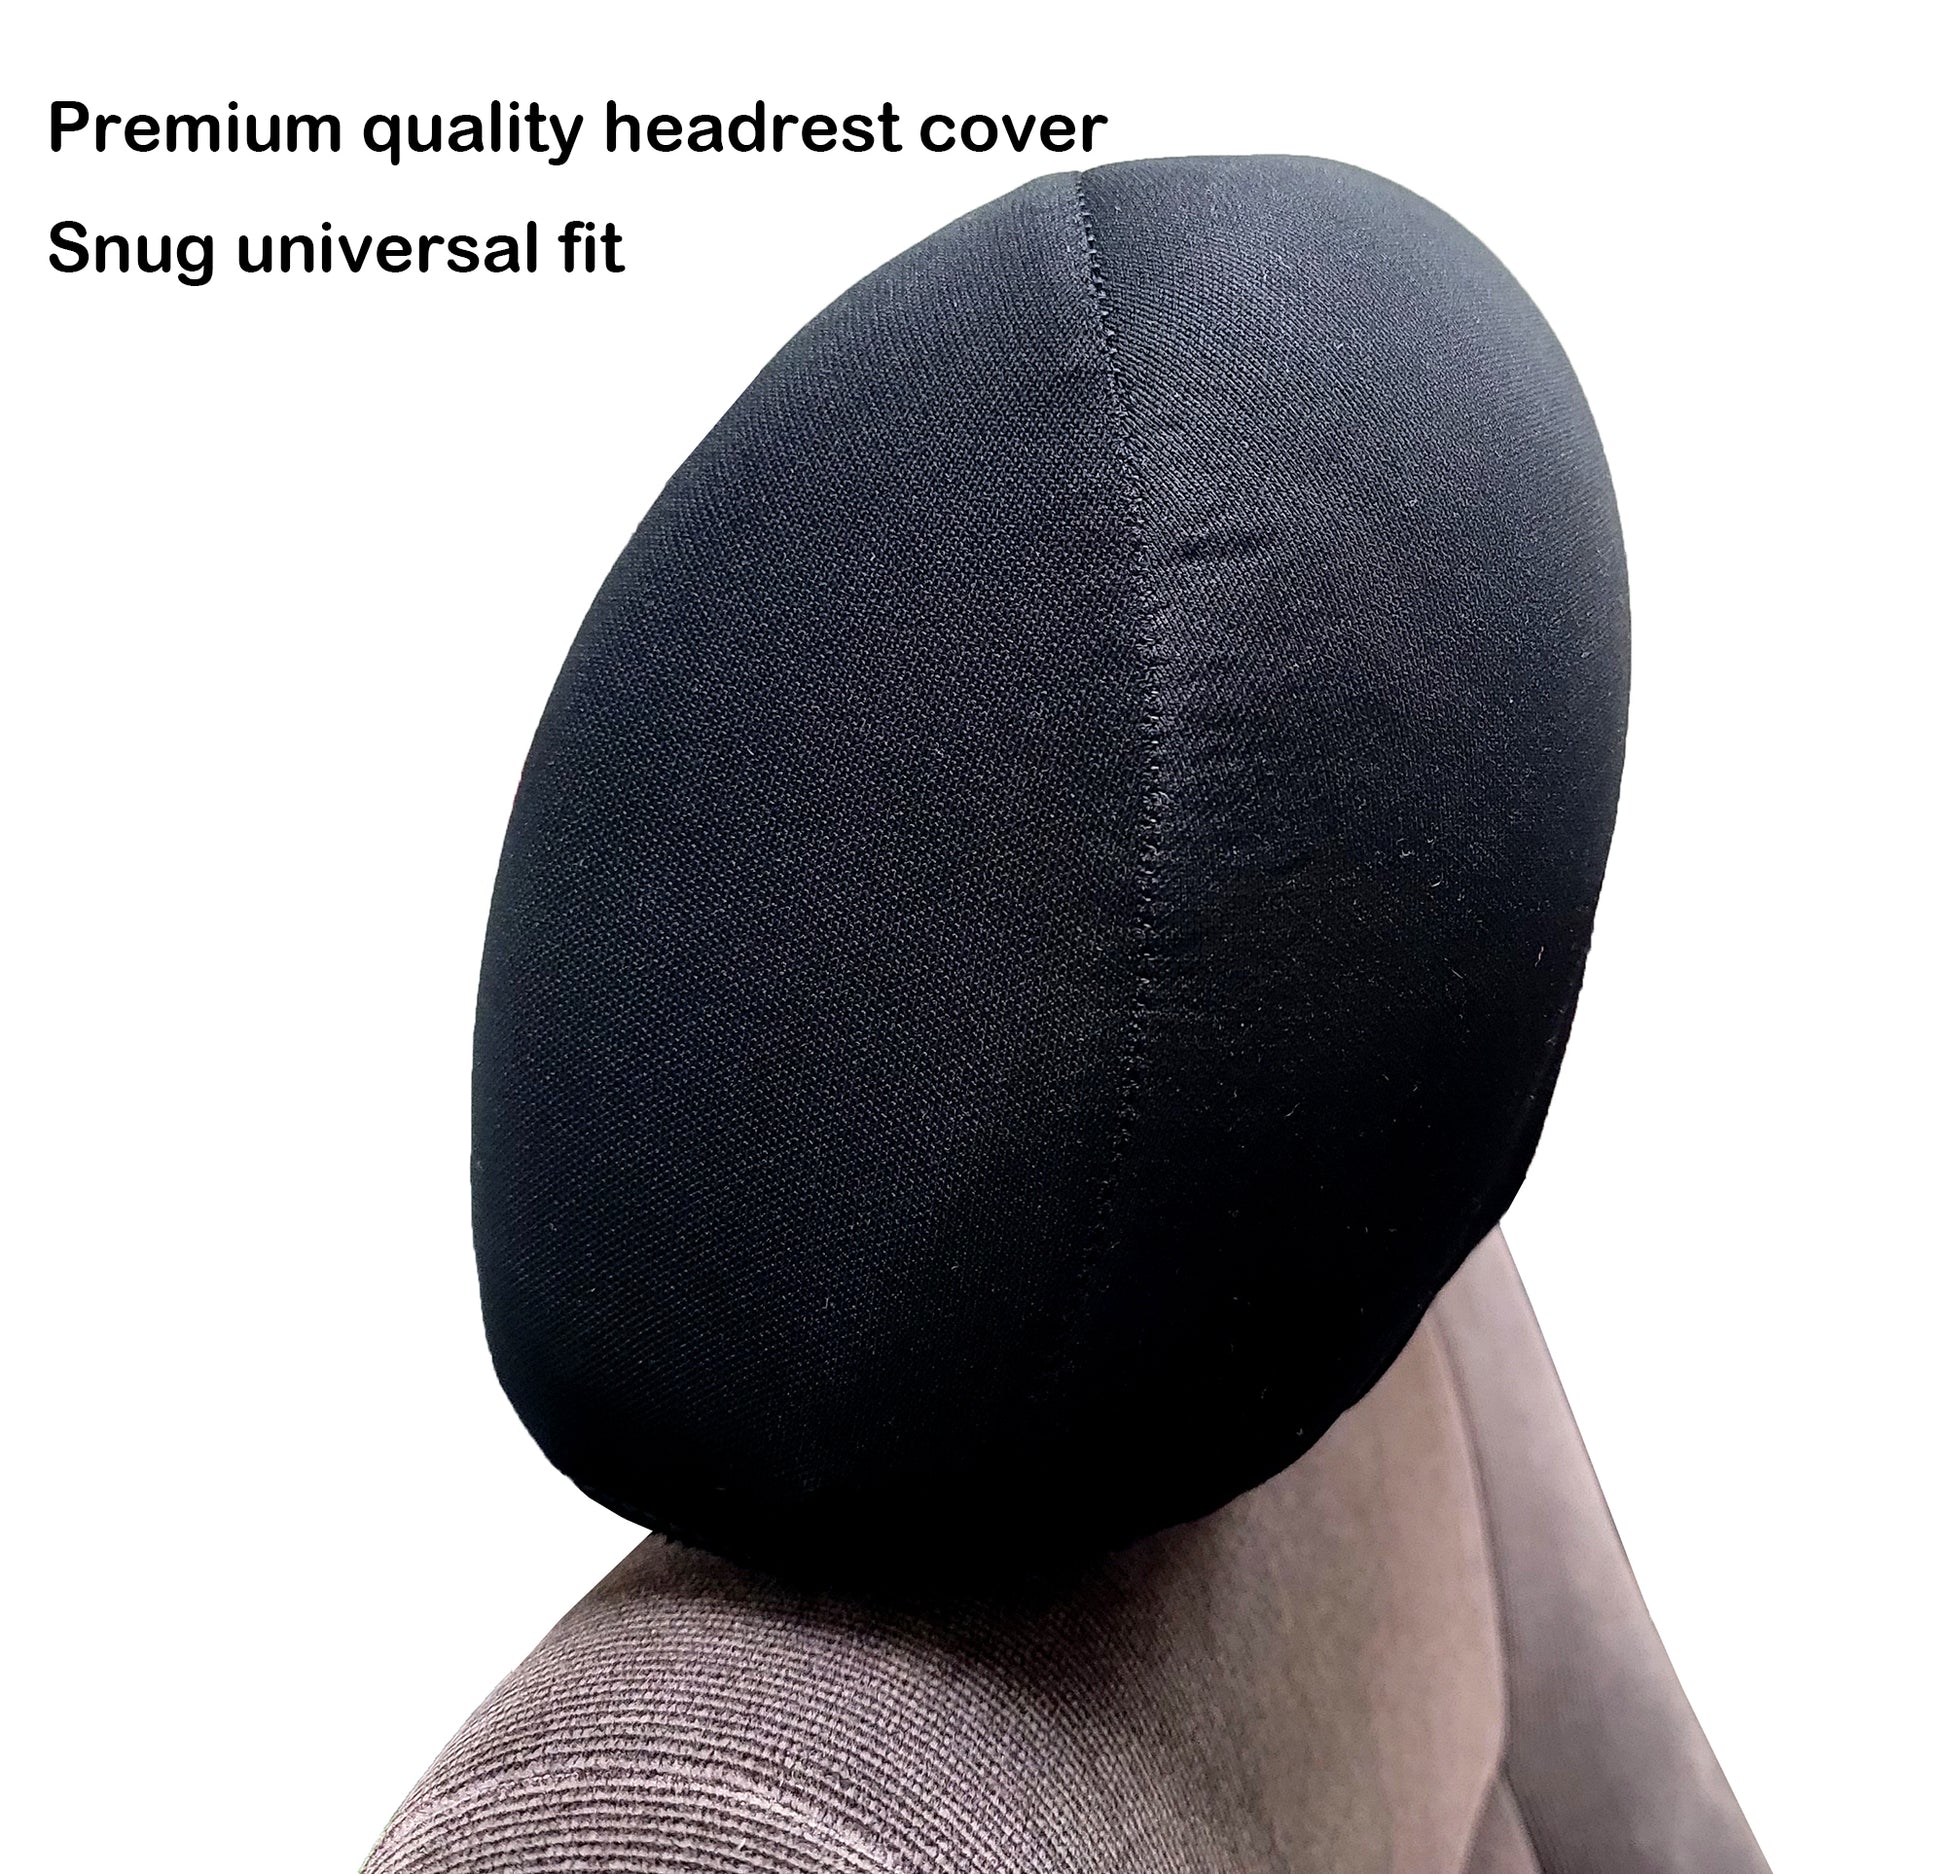 headrest cover detail image